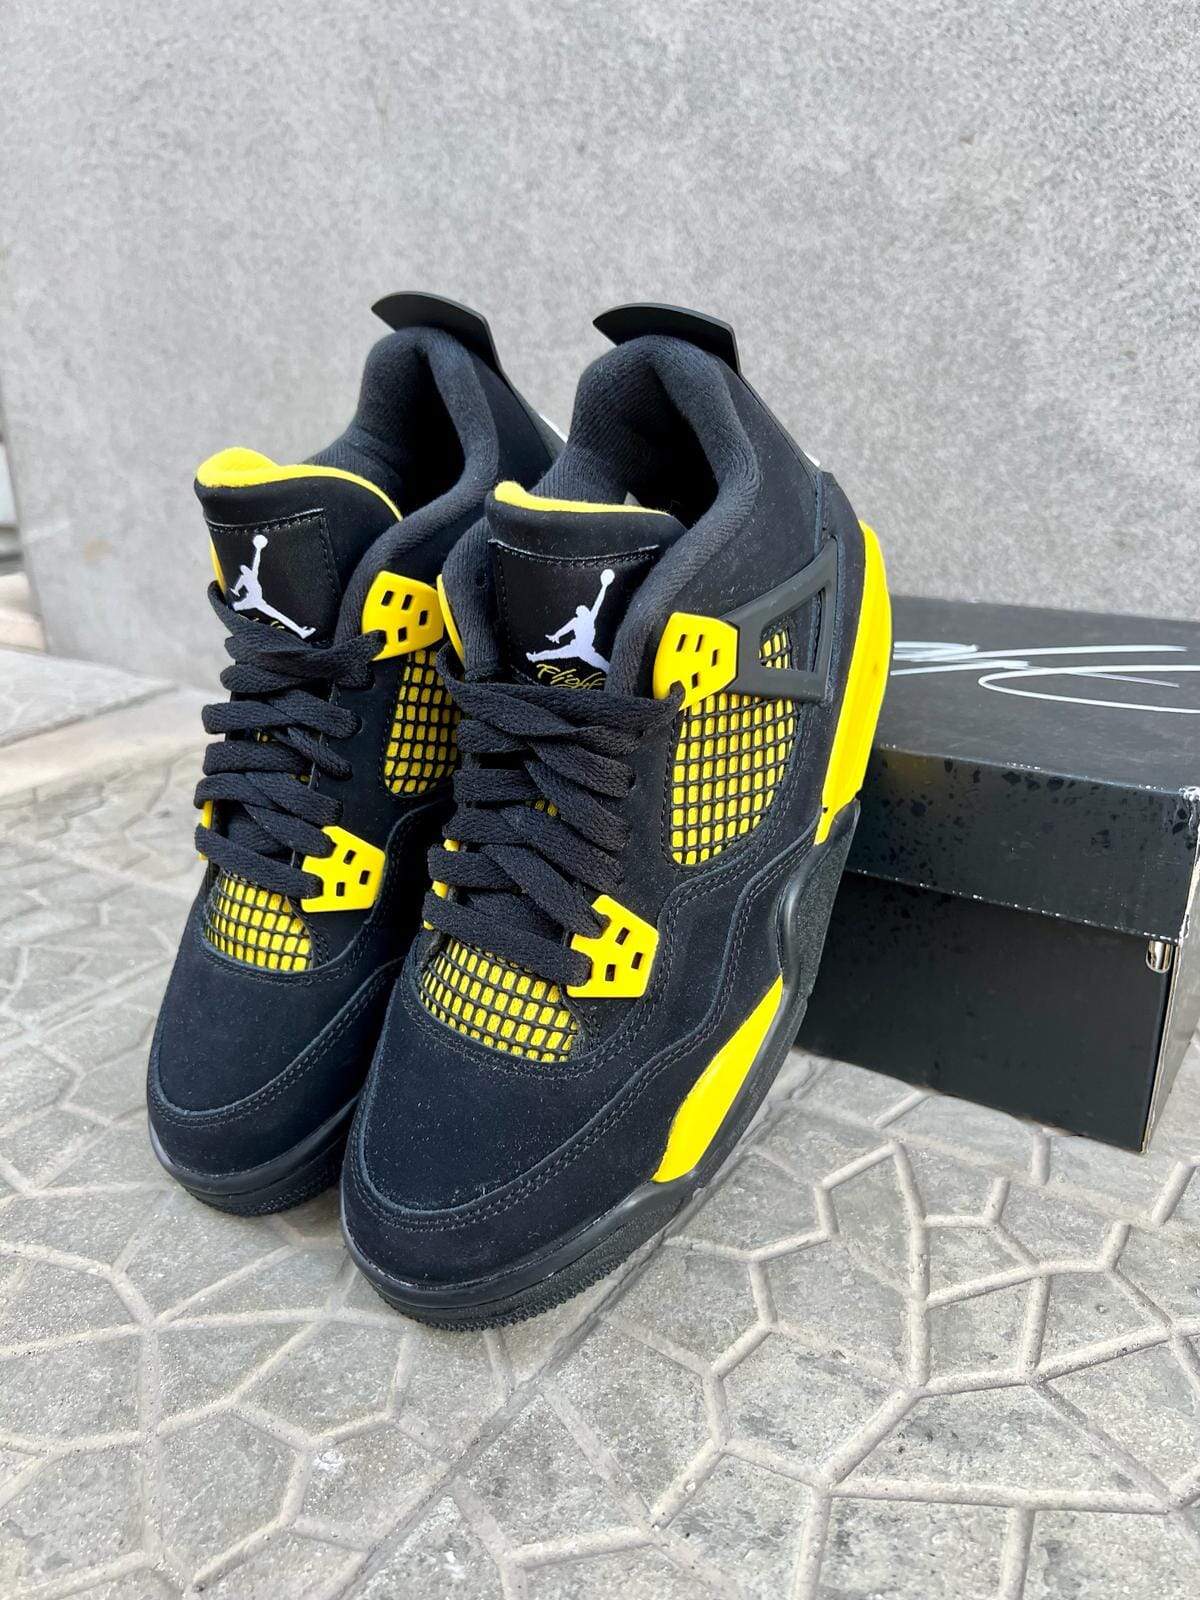 Sneaker Air Jordan 4 "Thunder".